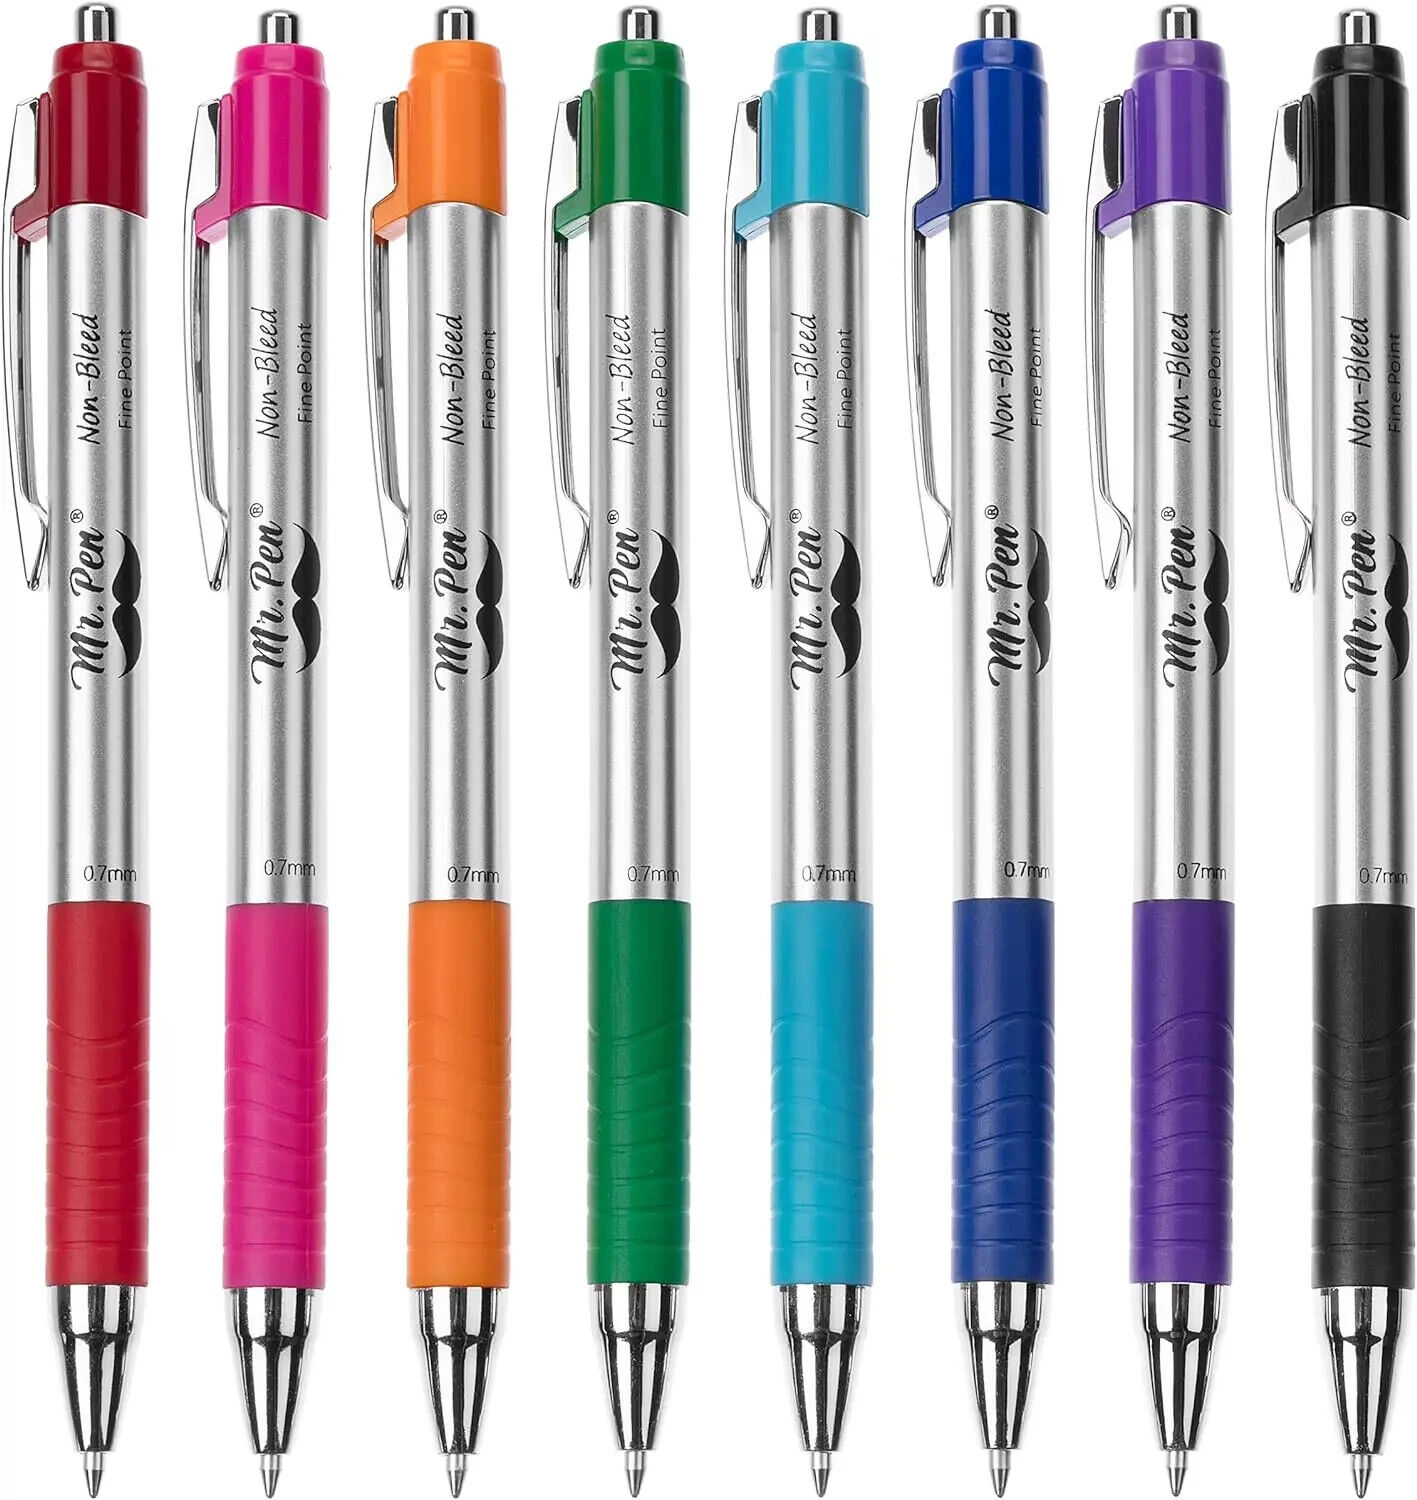 Mr. Pen- Bible Pens, 8 Pack, Assorted Color Pens, Bible Pens No Bleed Through, B